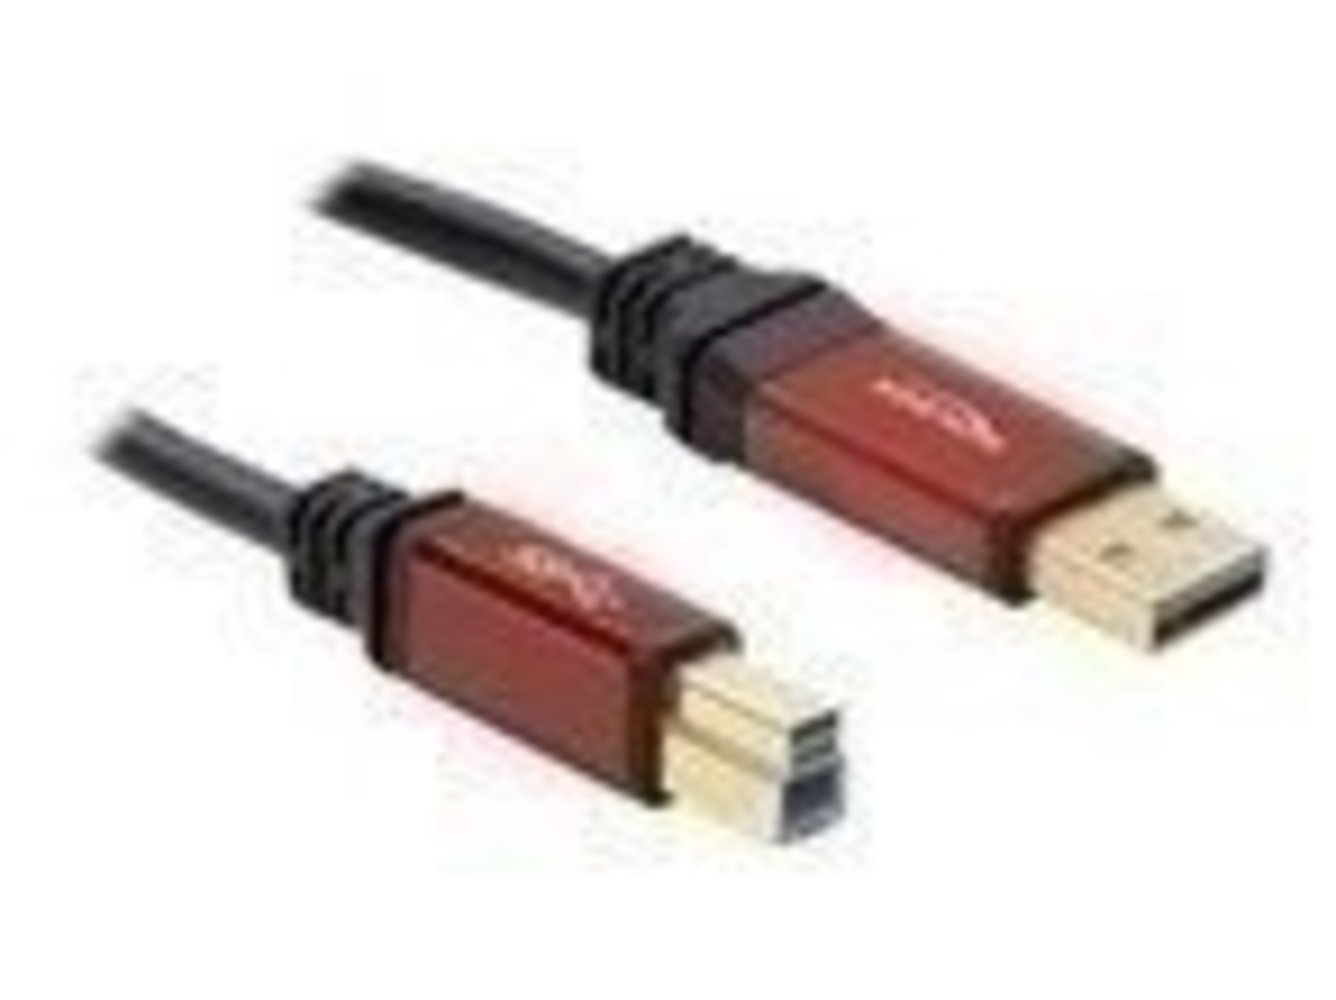 DELOCK USB 3.0 Kabel in Rot, A-B Stecker auf Stecker, 5.0m Länge